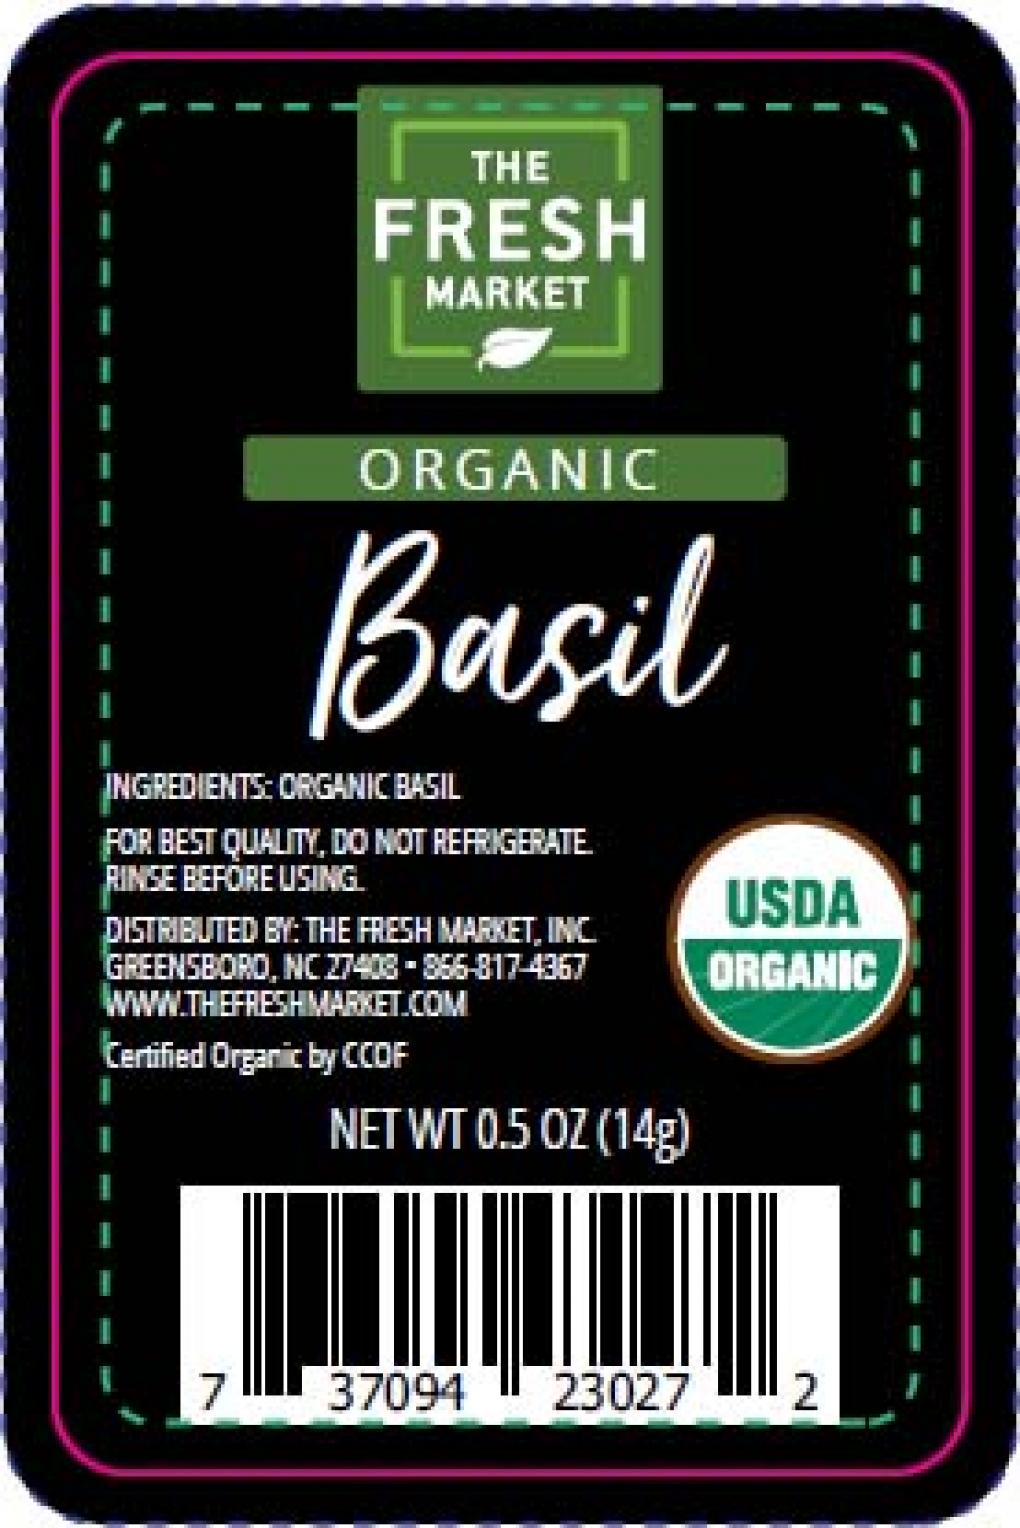 Shenandoah Growers of imported organic Basil due to Cyclospora